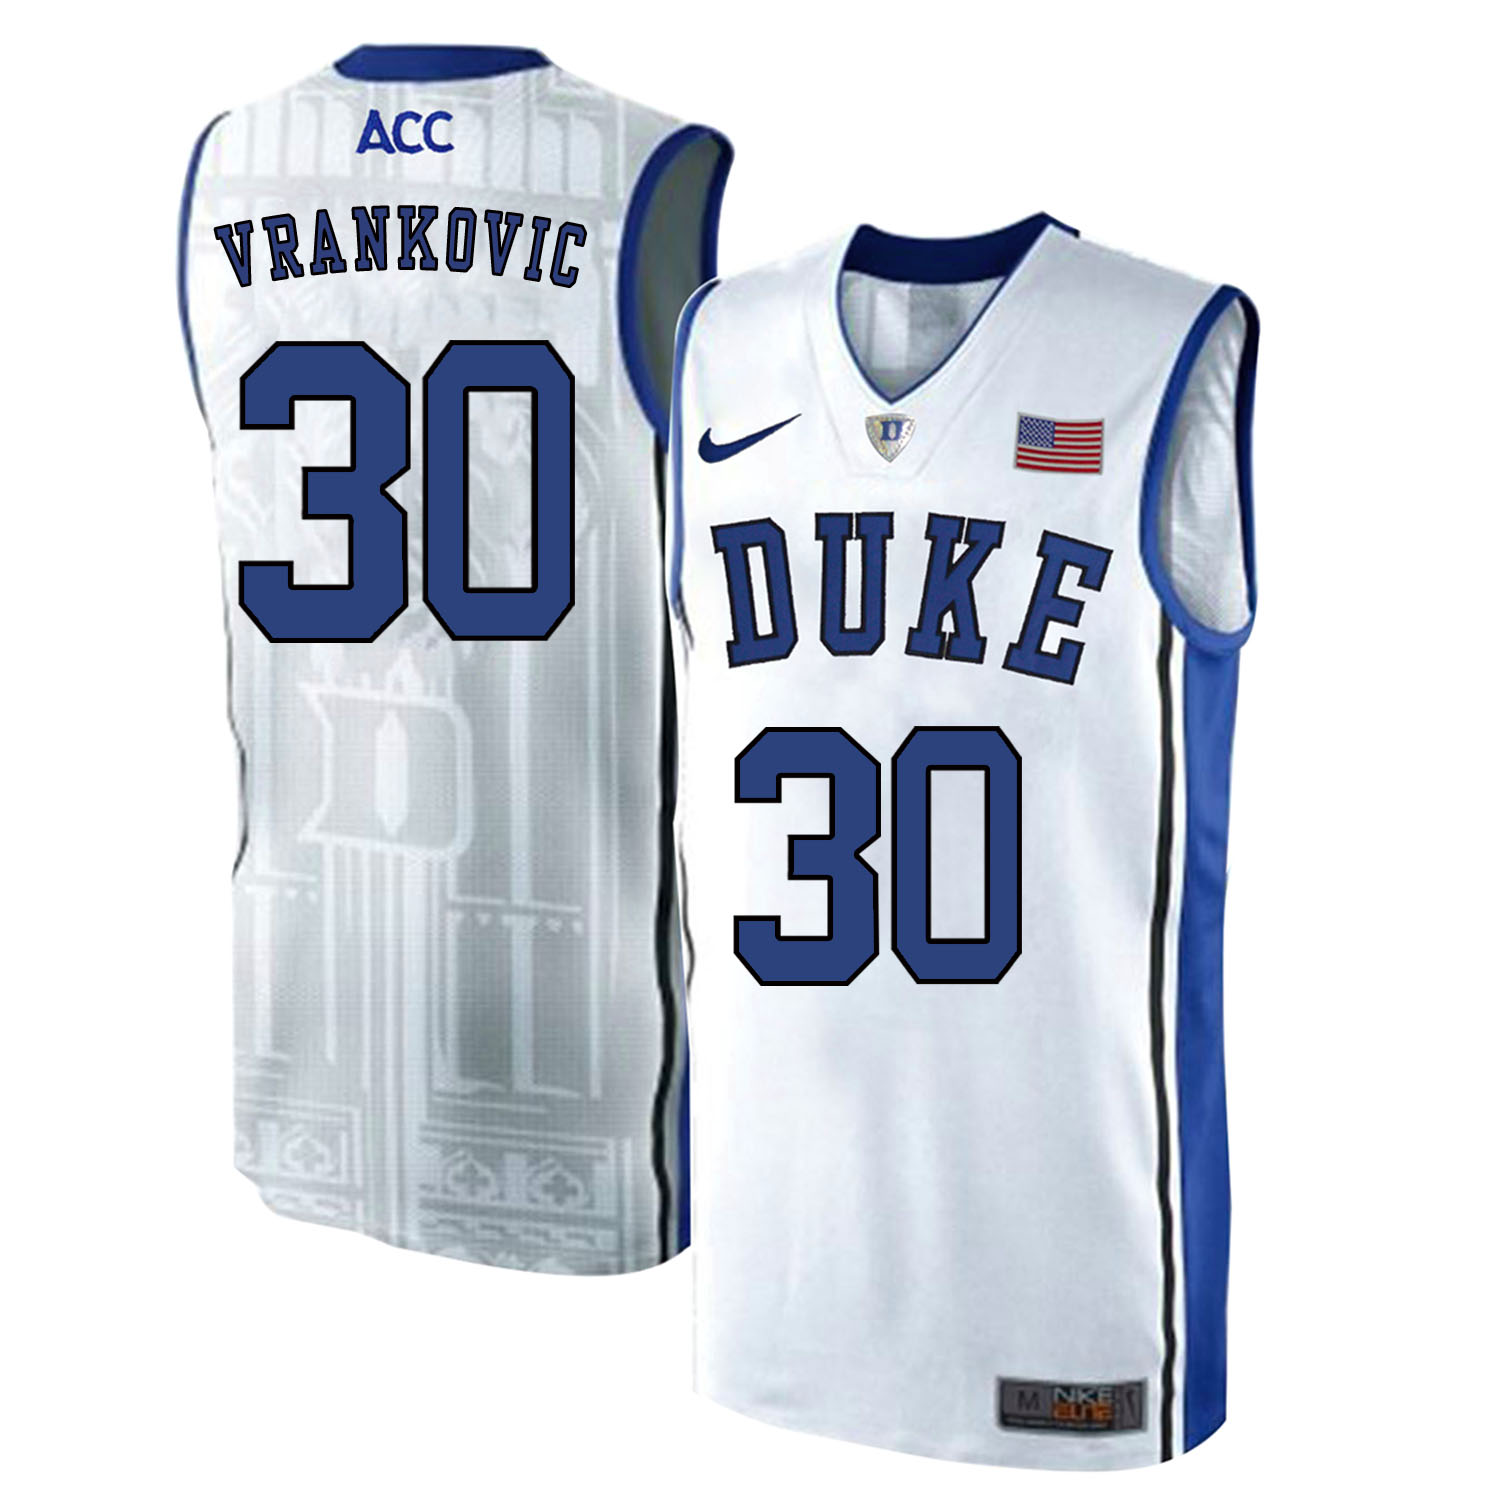 Duke Blue Devils 30 Antonio Vrankovic White Elite Nike College Basketball Jersey